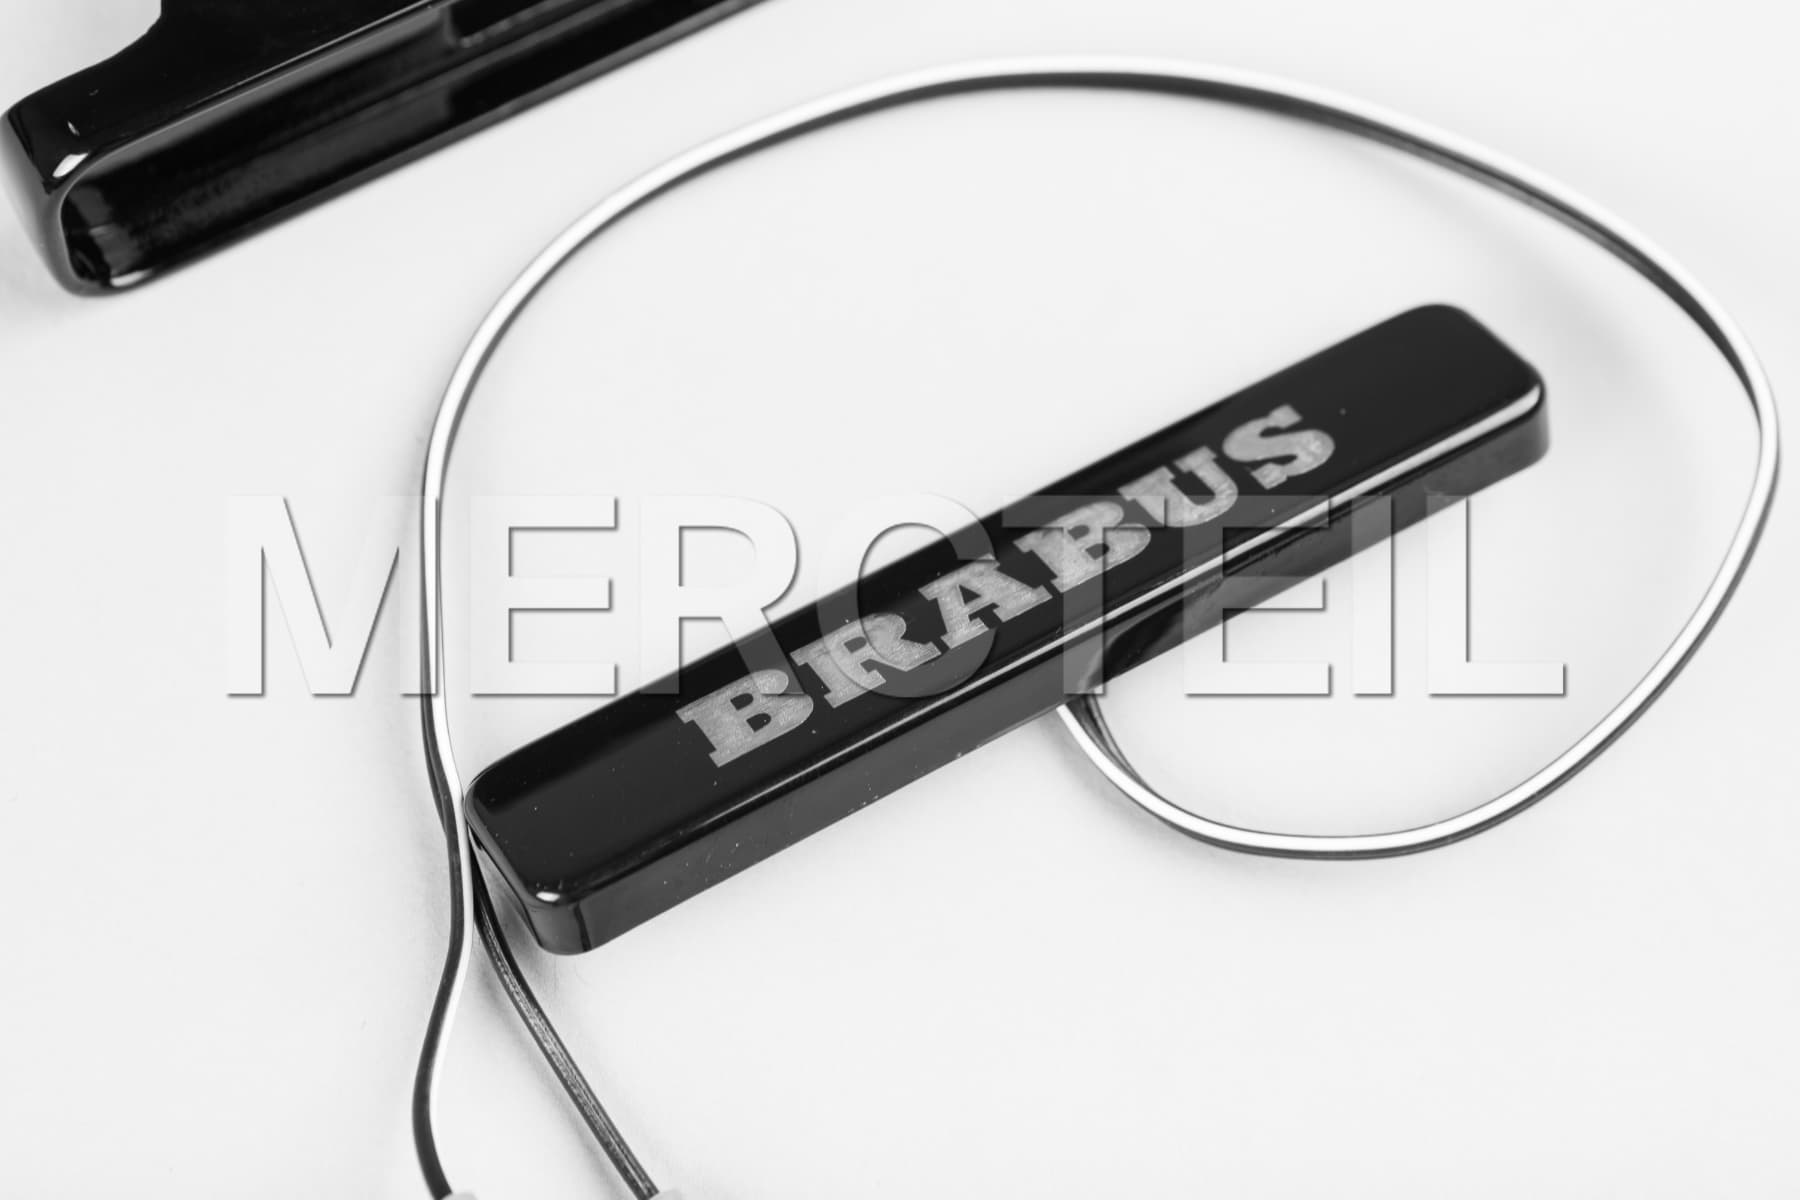 Brabus Illuminated Grill Emblem Bar Mercedes Benz S65 AMG C217 15-16